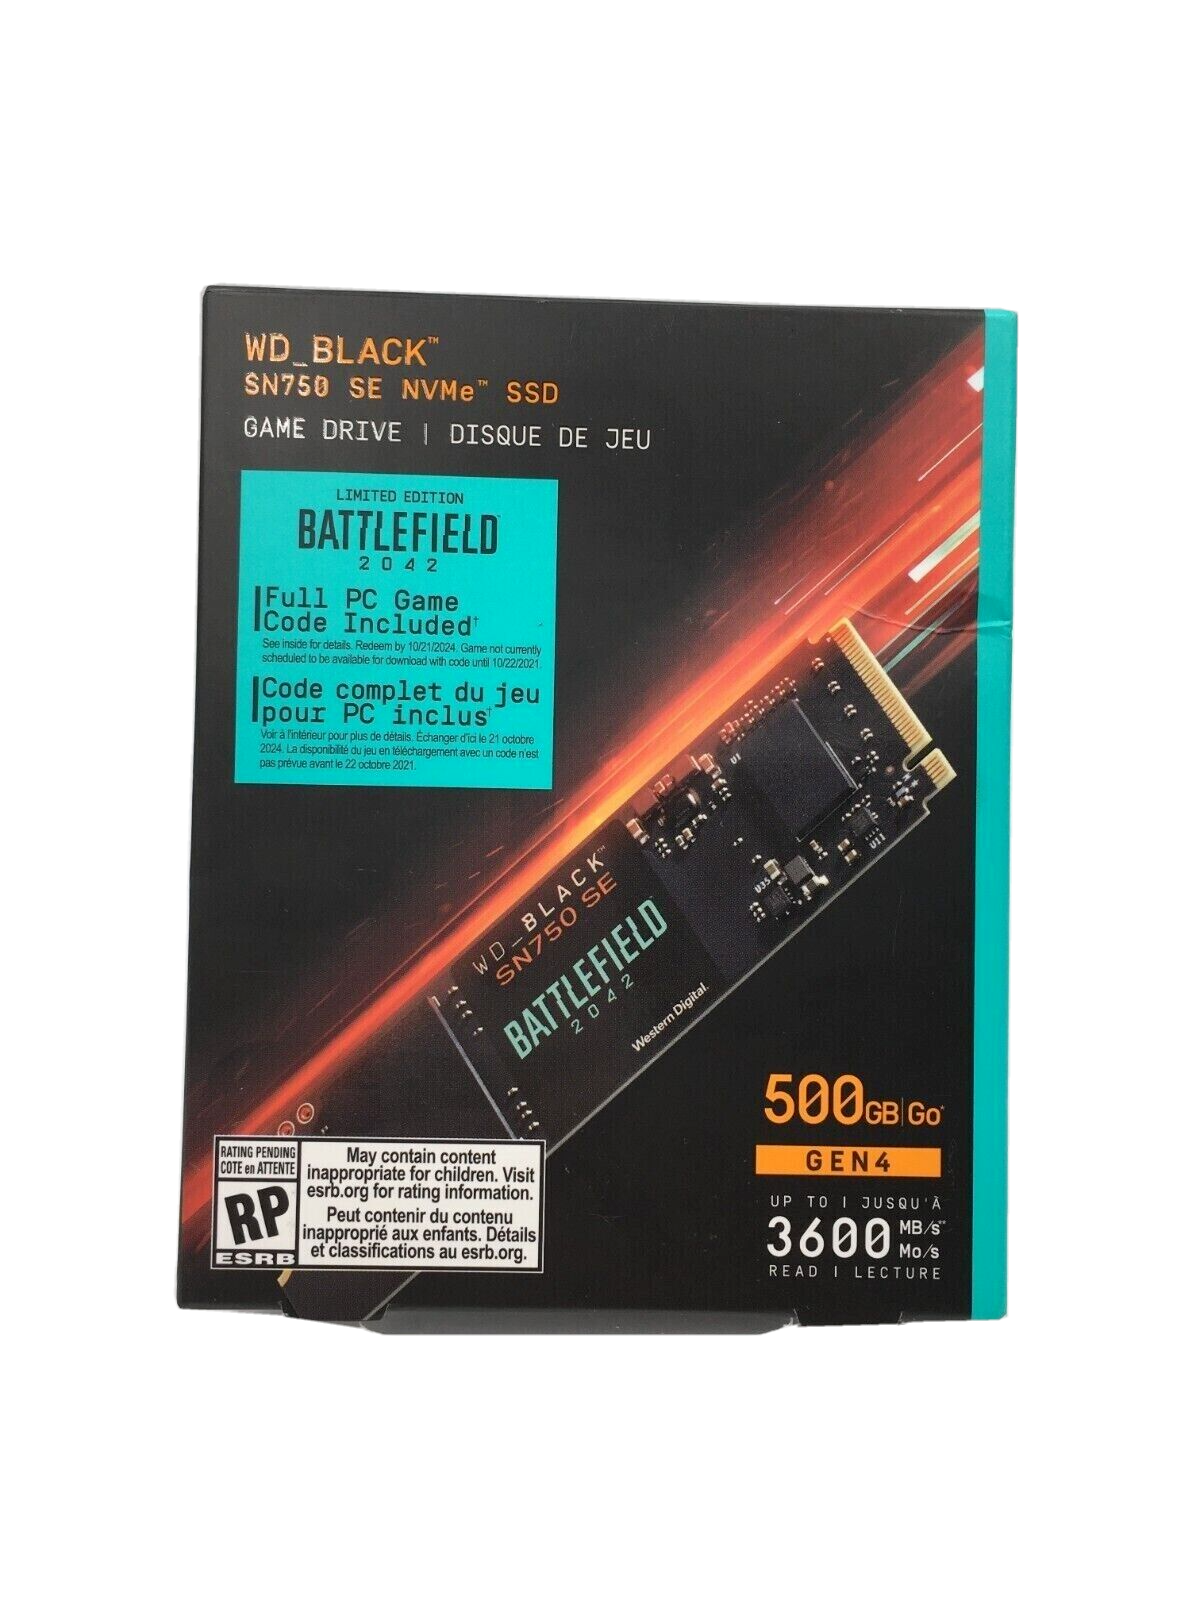 WD_Black 500GB|Go SN750 SE NVMe SSD Game Drive GEN 4 3600 MB/s